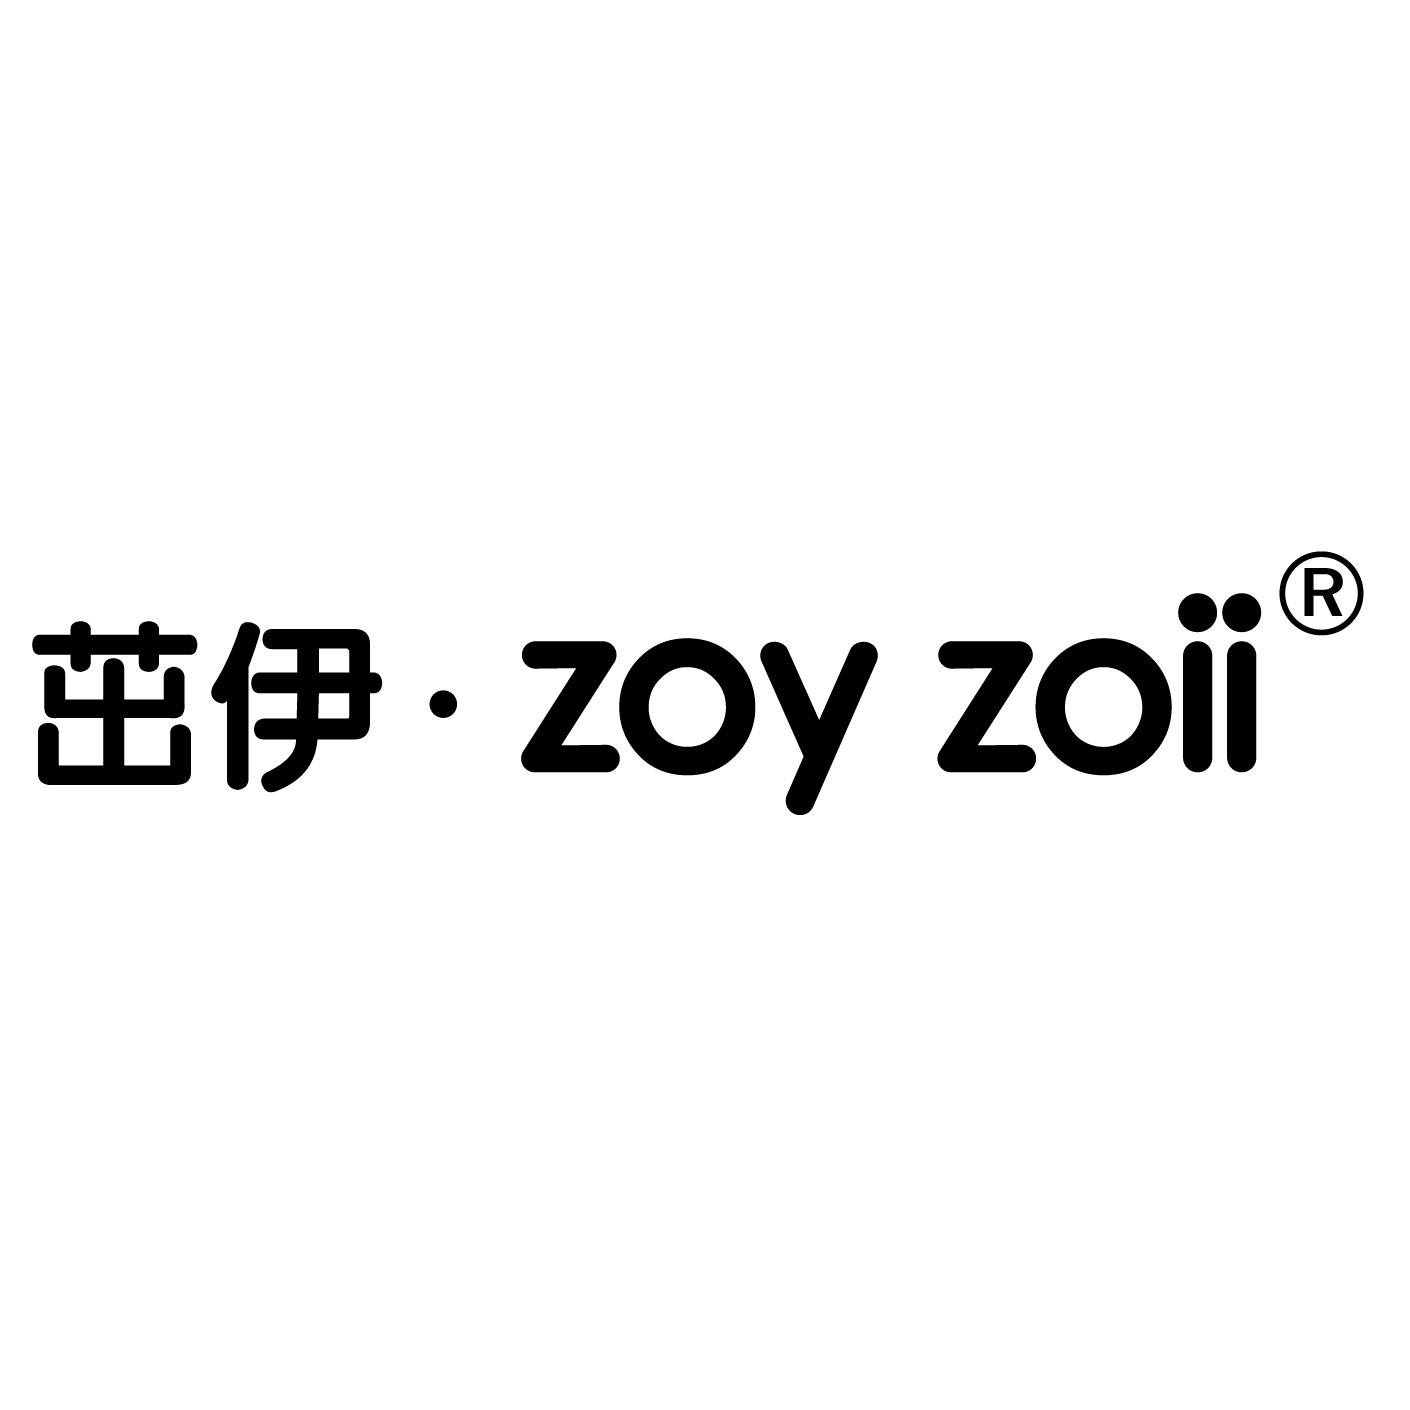 zoyzoii旗舰店